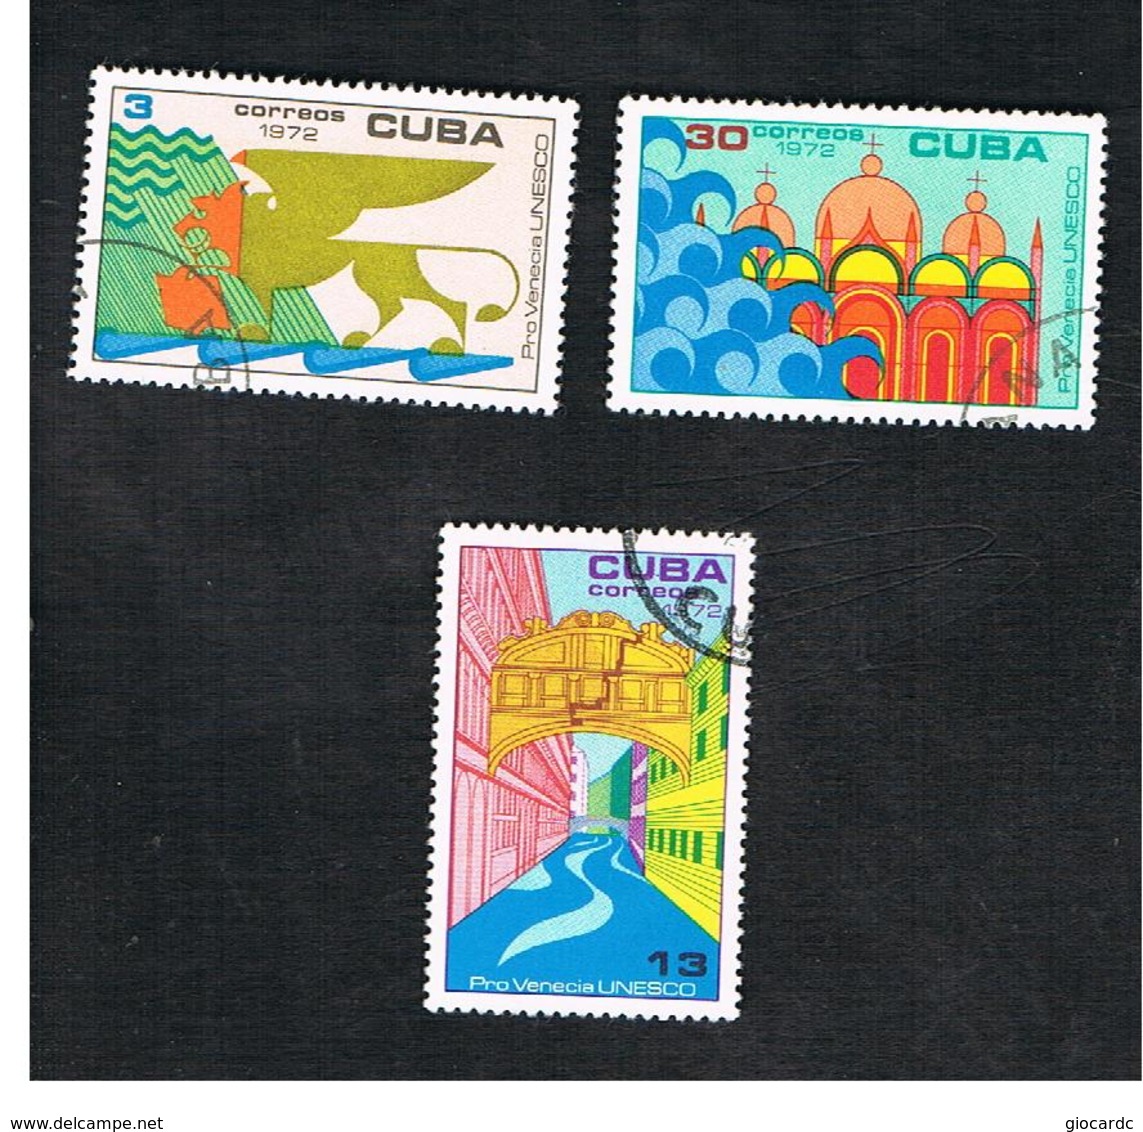 CUBA -   SG  1985.1887   -  1972 UNESCO: SAVE VENICE (COMPLET SET OF 3)  - USED - Usati